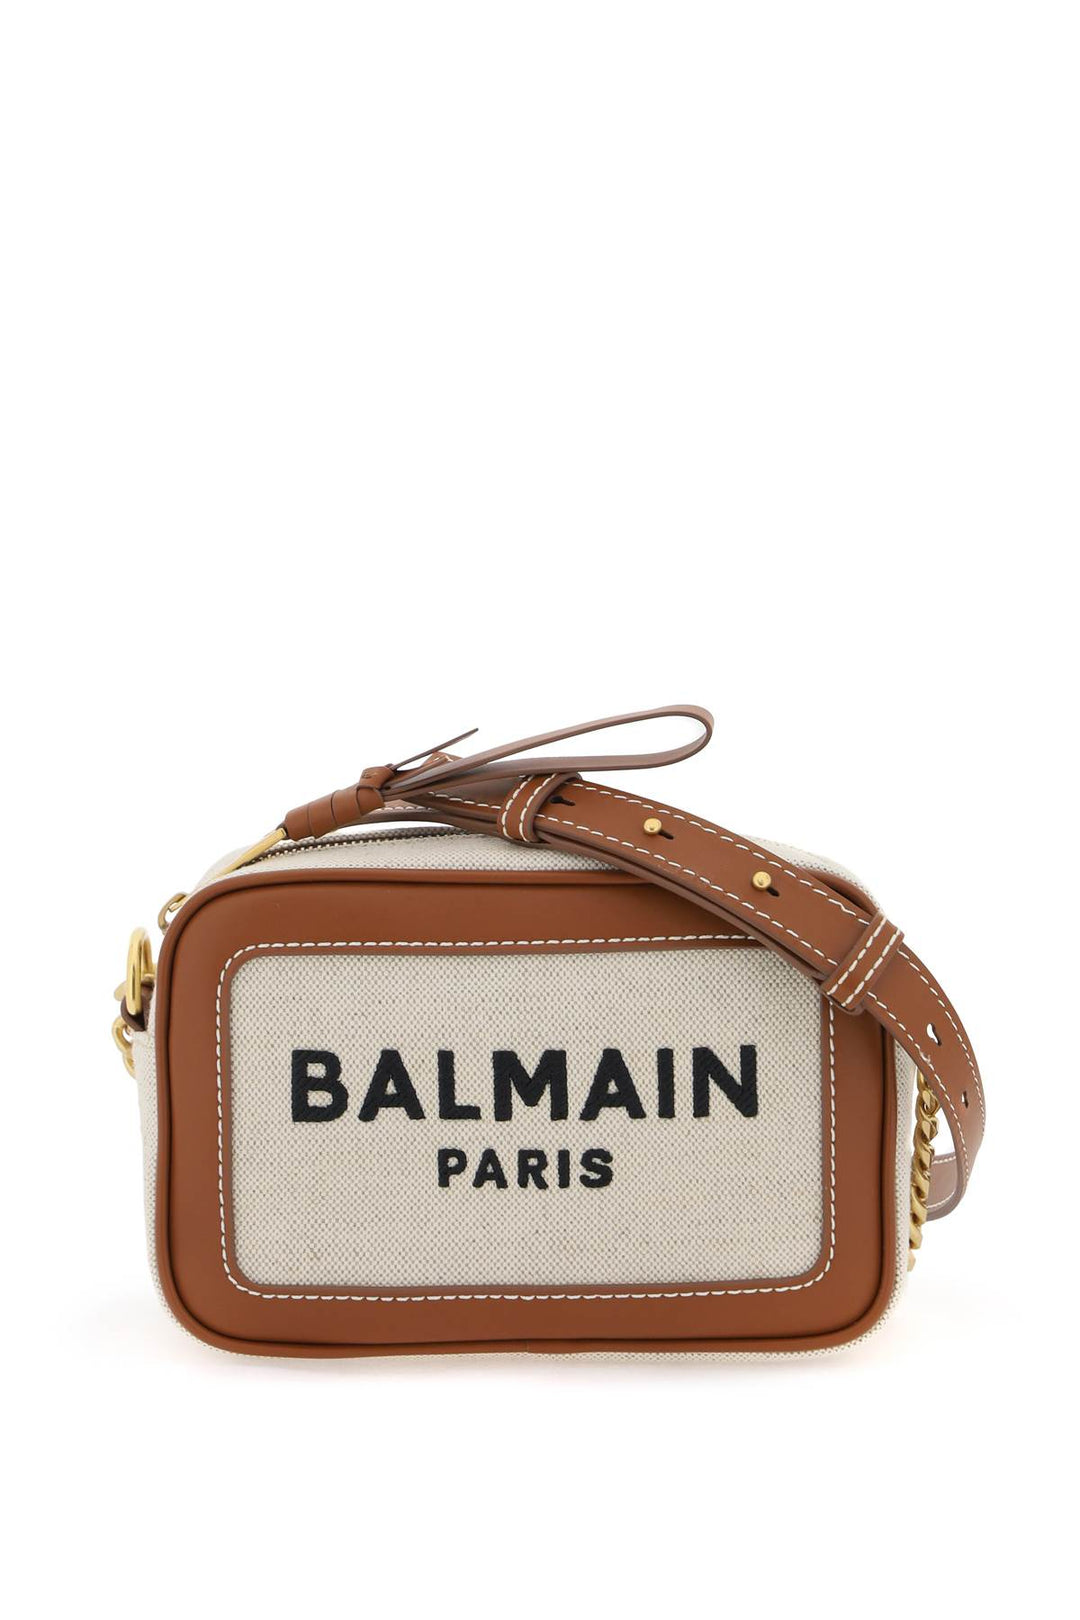 Balmain B Army Crossbody Bag   Brown